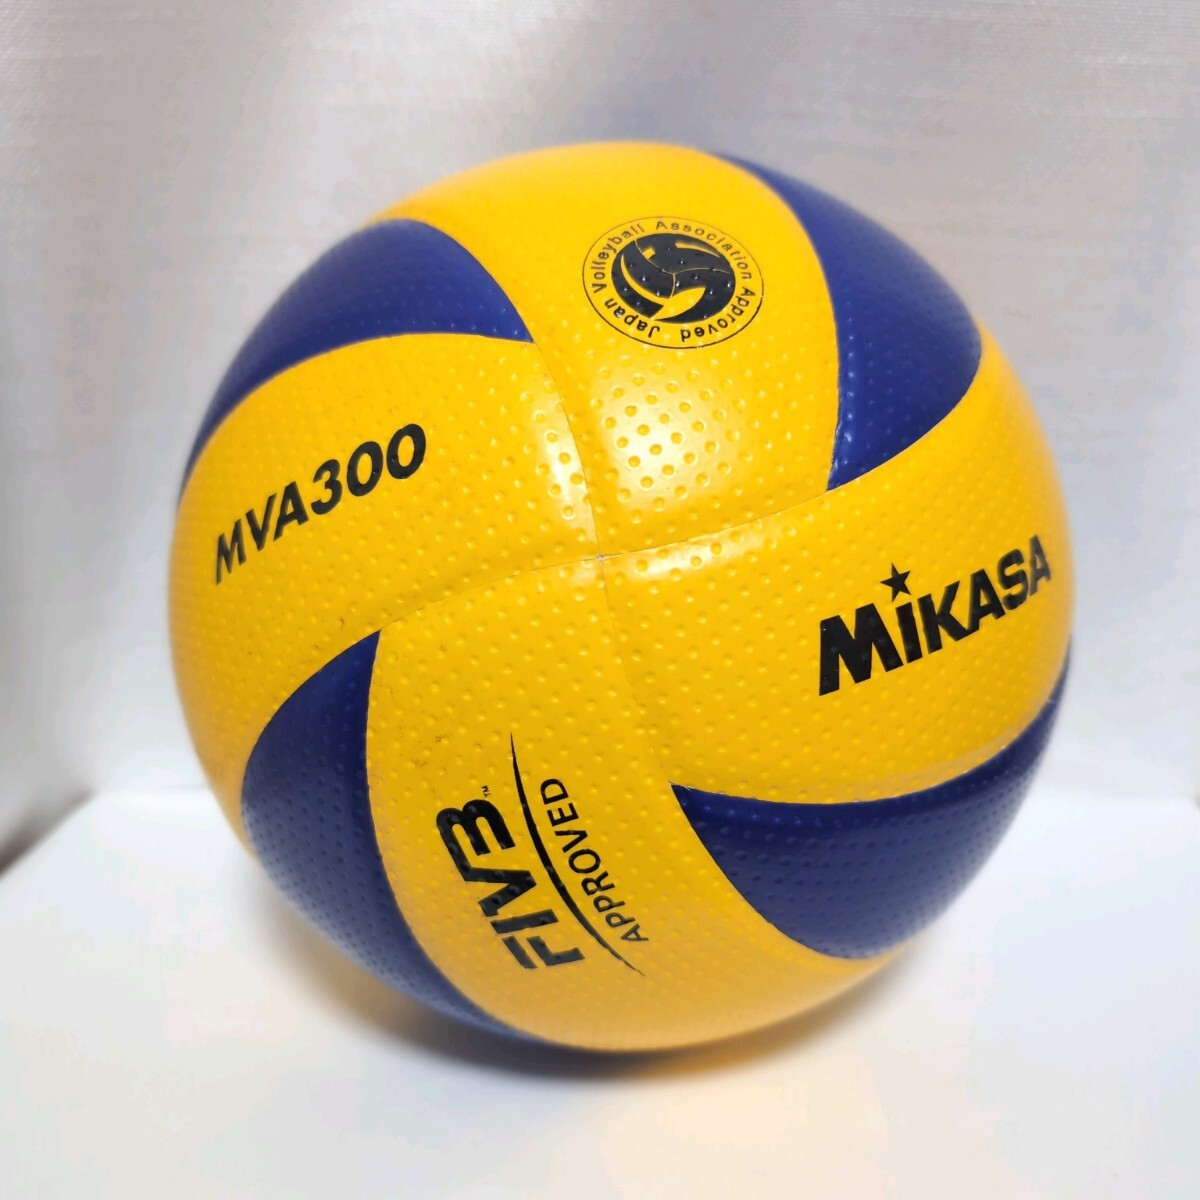 MO□美品□MIKASA ミカサ バレーボール 5号球 MVA300 国際公認球 検定 